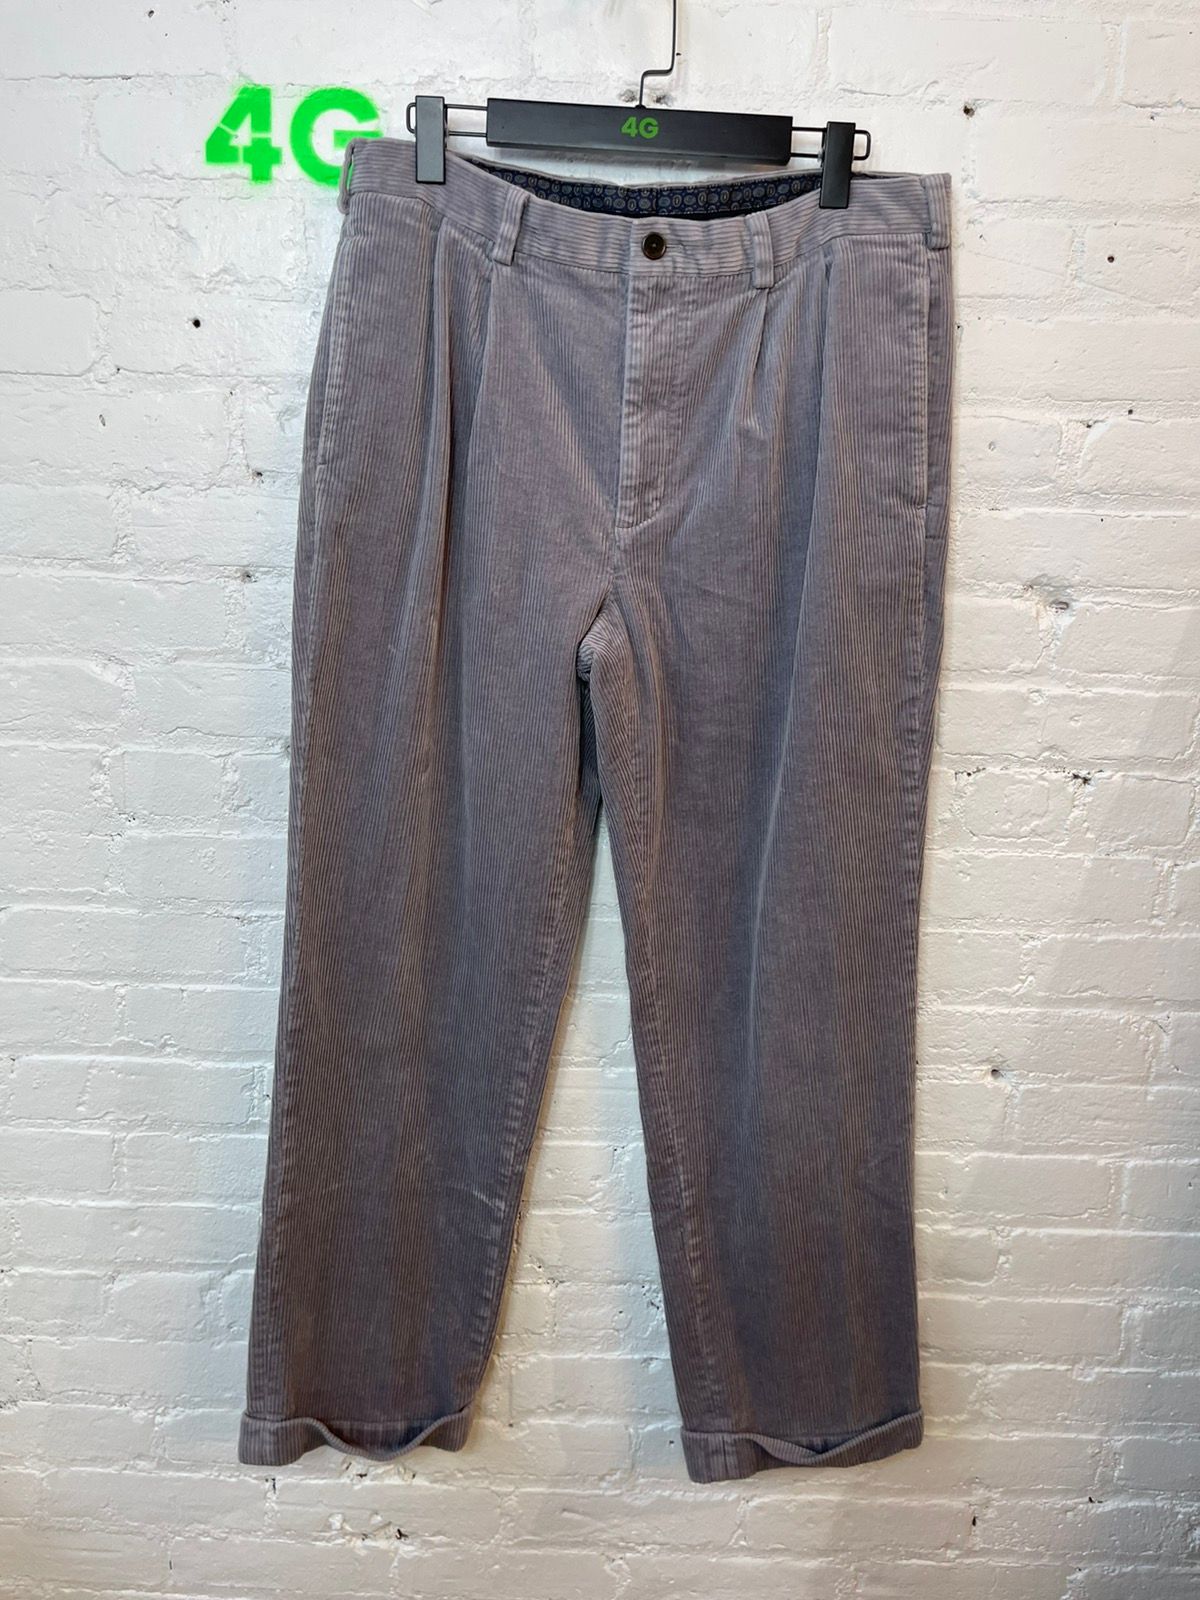 Vintage Light Lavender Thick Corduroy Pleated Pants Jeans